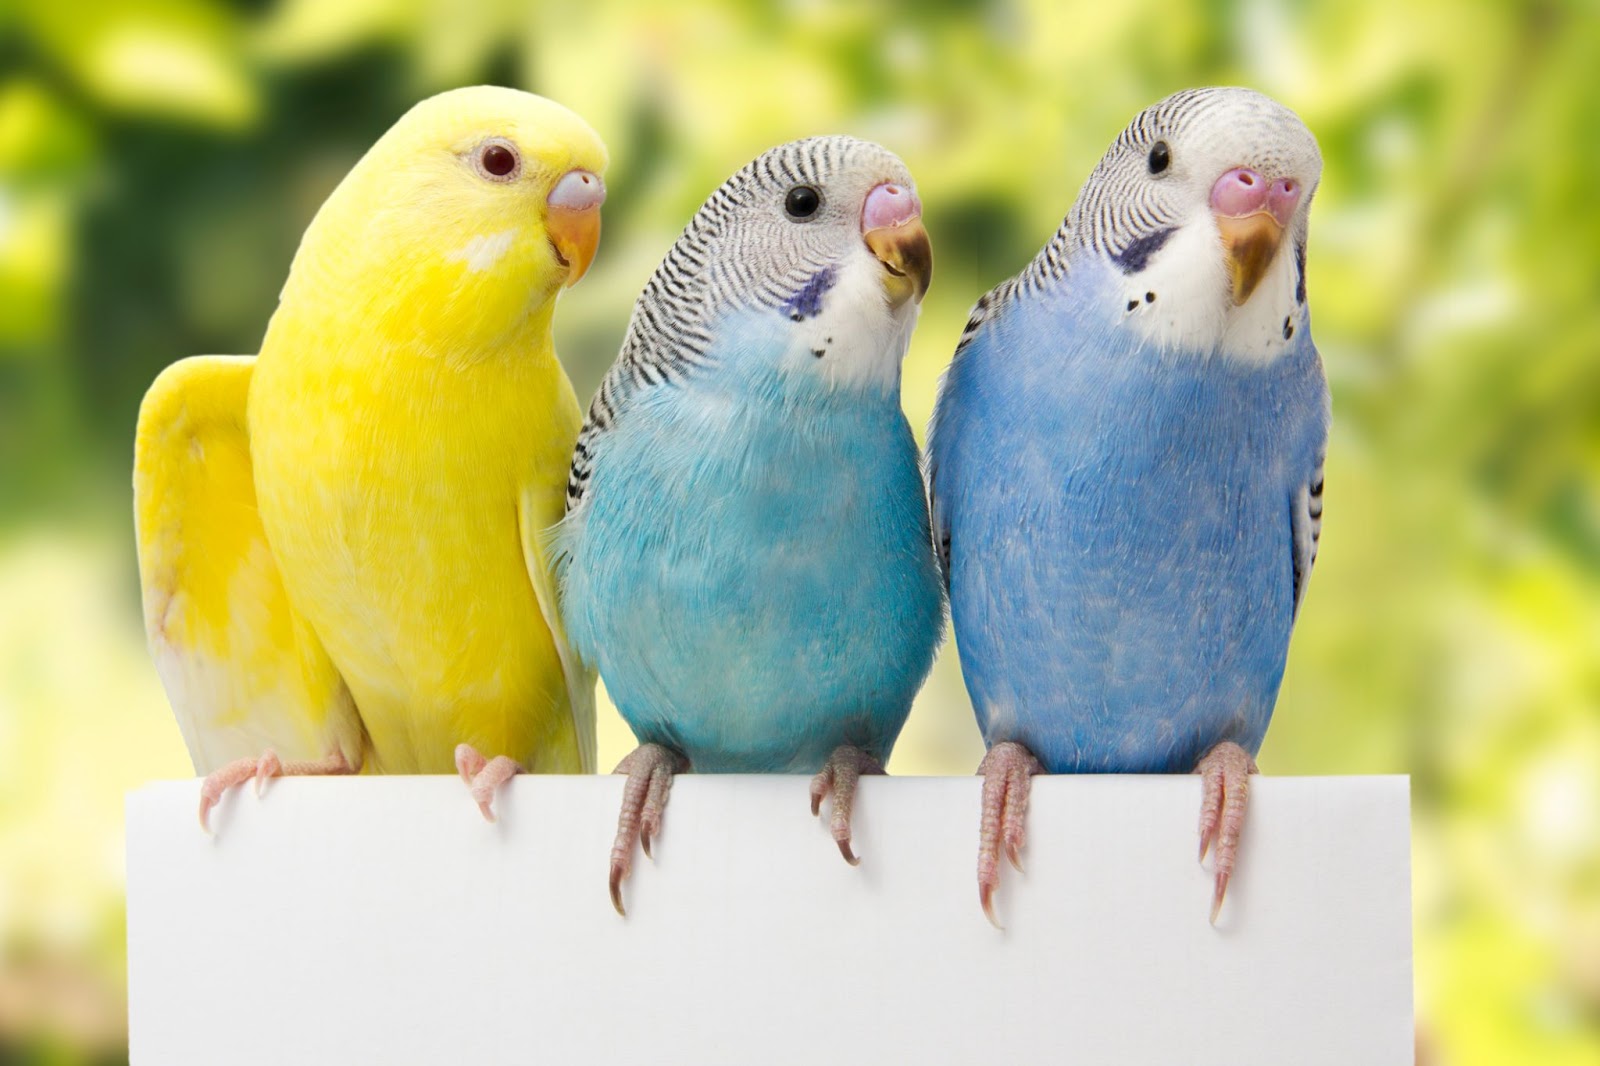 Parrotlets vs parakeets explained at Petrestart.com.